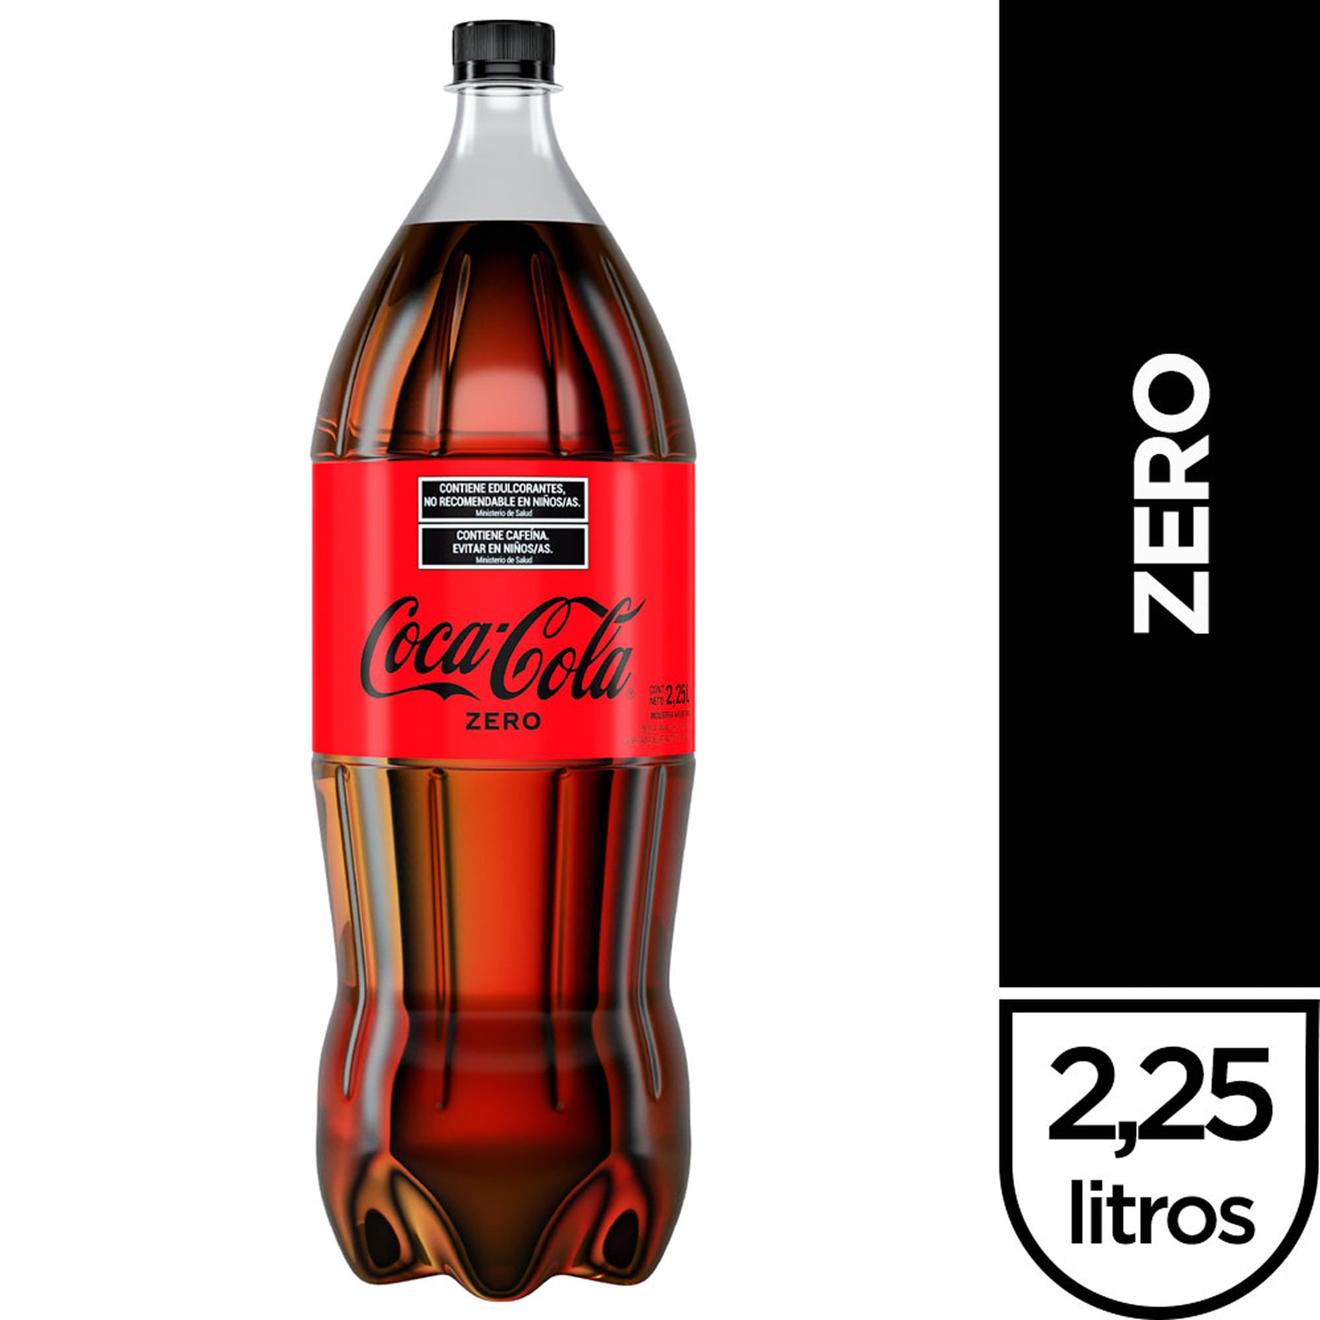 Oferta de Coca cola zero 2.25 lts. por $2325 en Carrefour